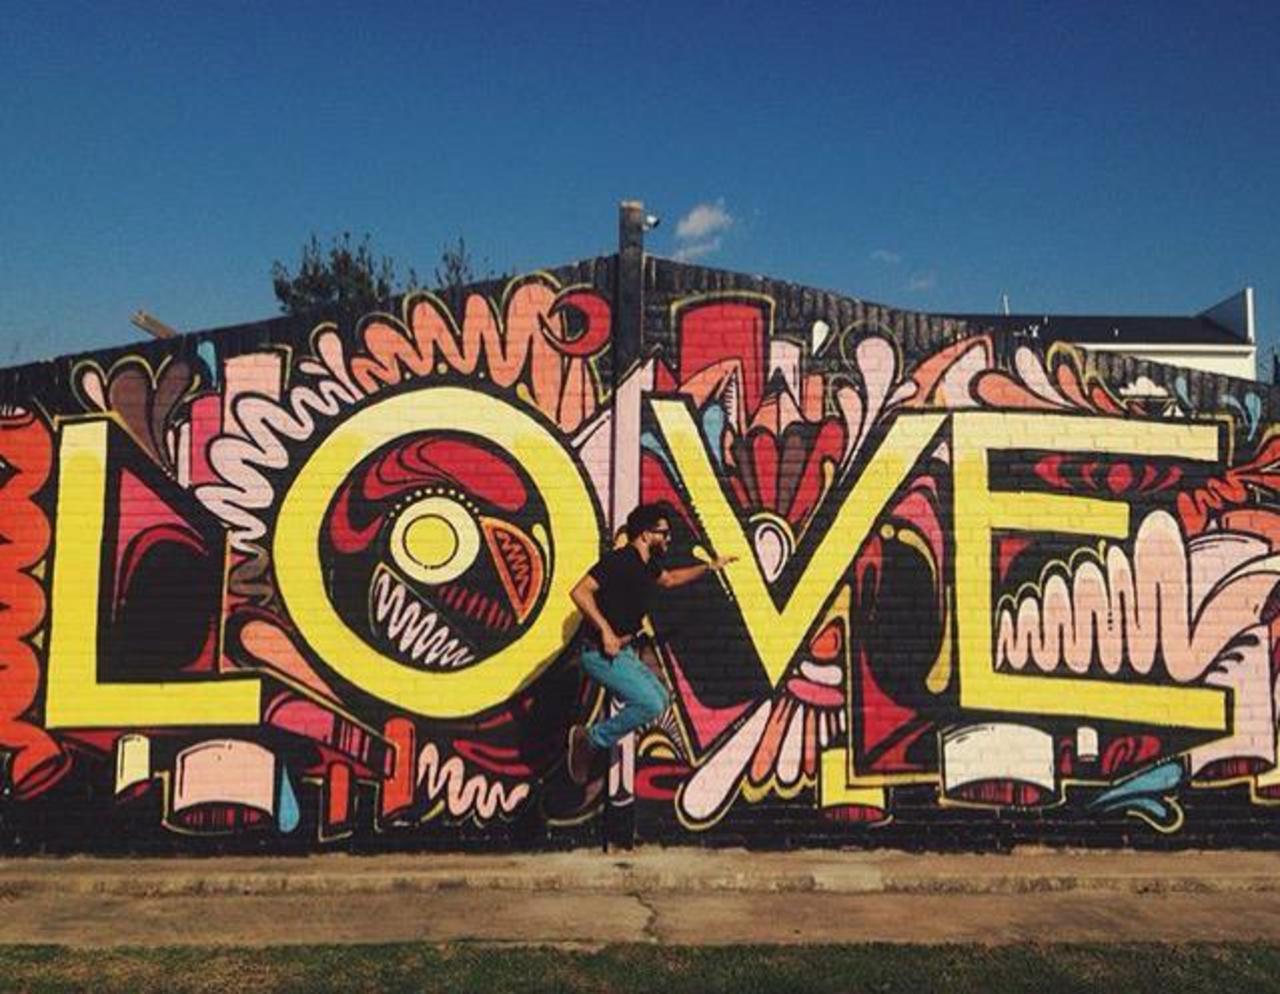 RT @GoogleStreetArt: Love ❤️
Street Art by WileyArt

#art #graffiti #mural #streetart http://t.co/8FsrrzNDZv